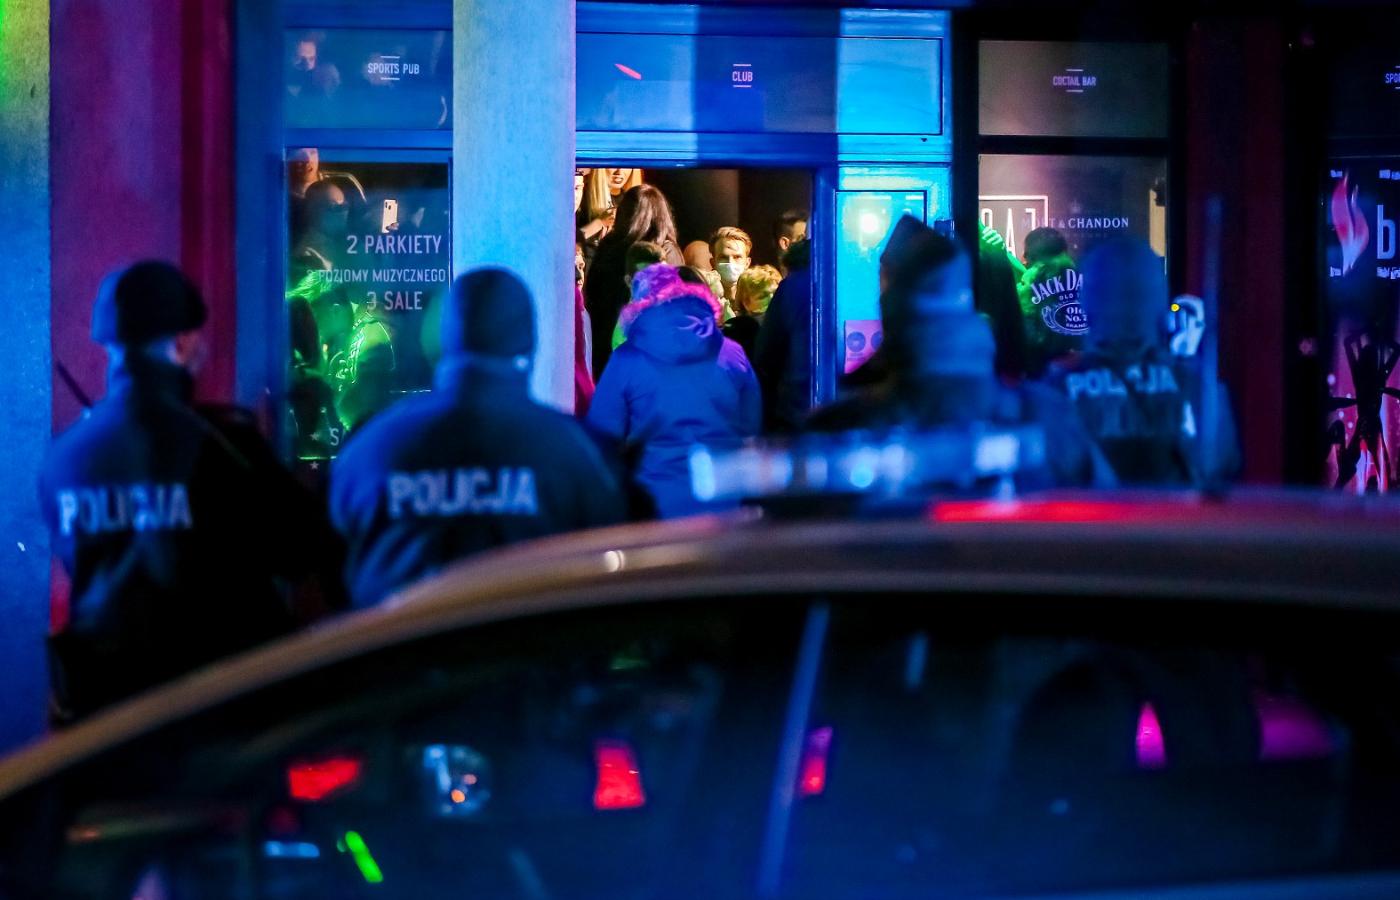 Policjanci pod otwartym klubem nocnym w Rybniku